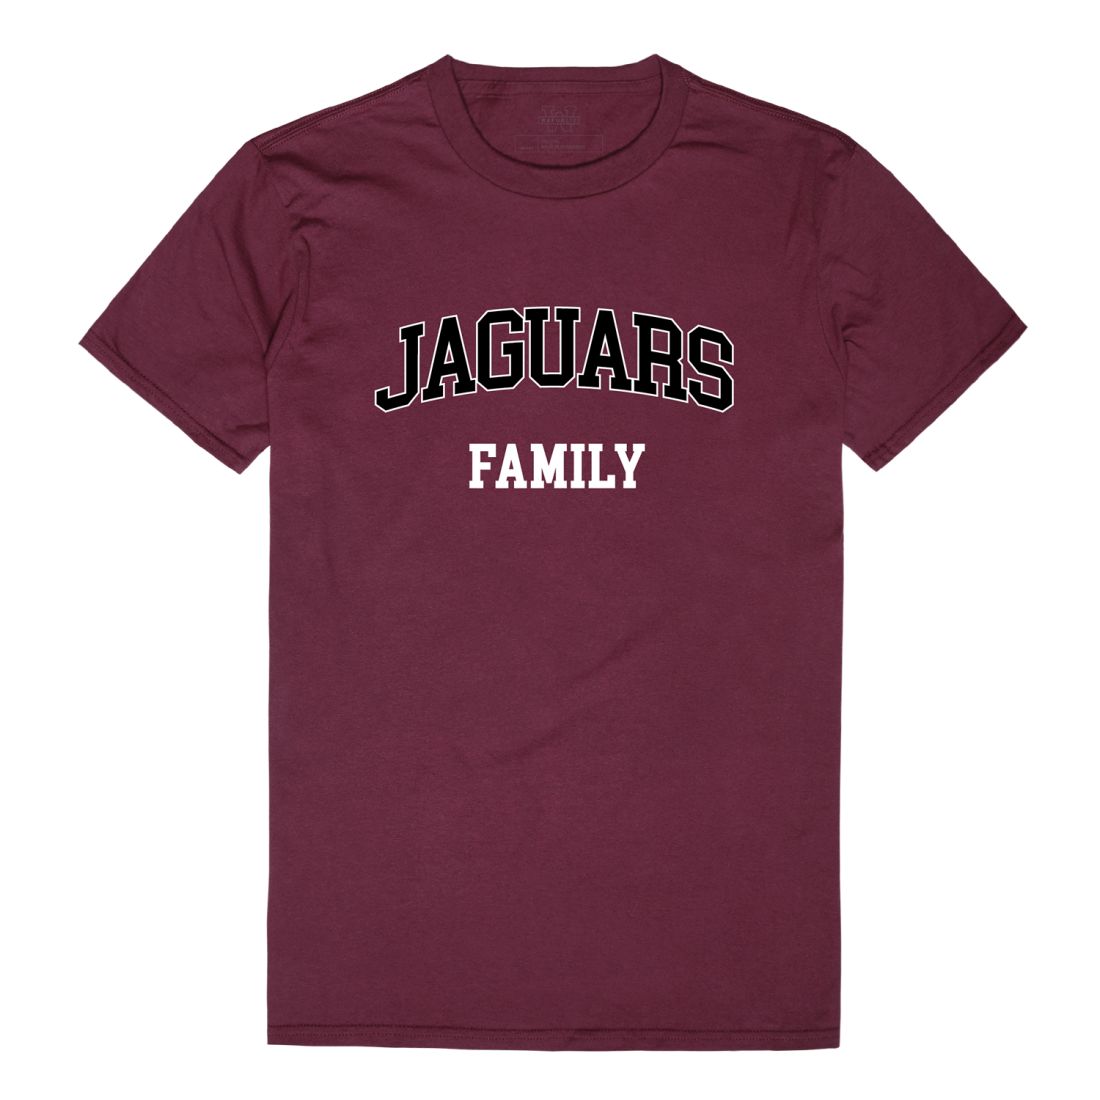 Texas A&M University-San Antonio Jaguars Family T-Shirt